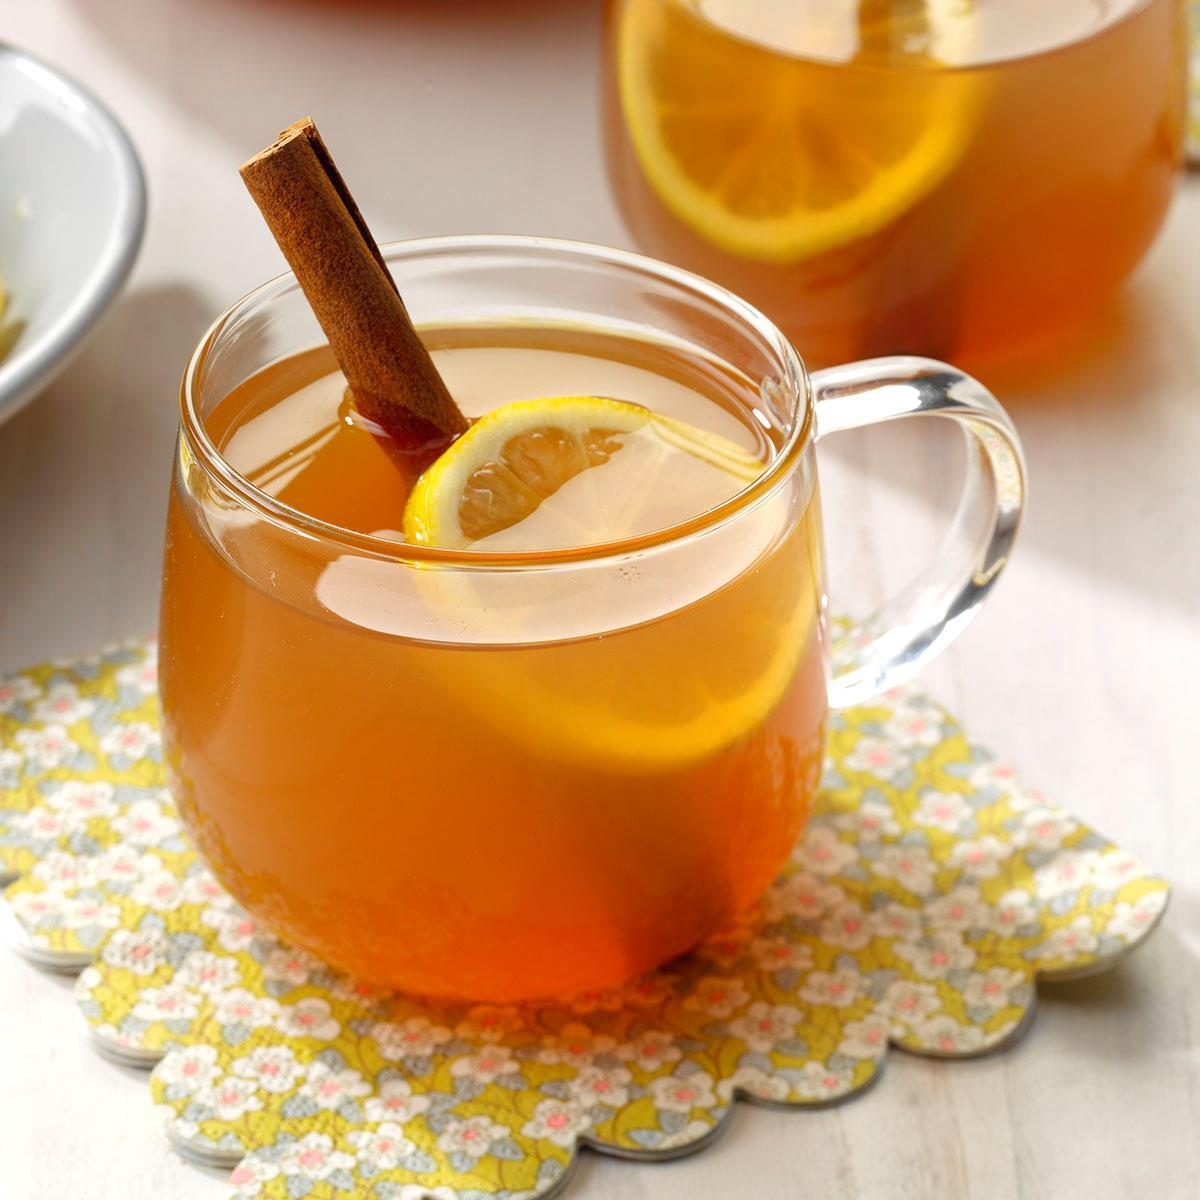 Cinnamon And Lemon Tea Best Life And Health Tips And Tricks